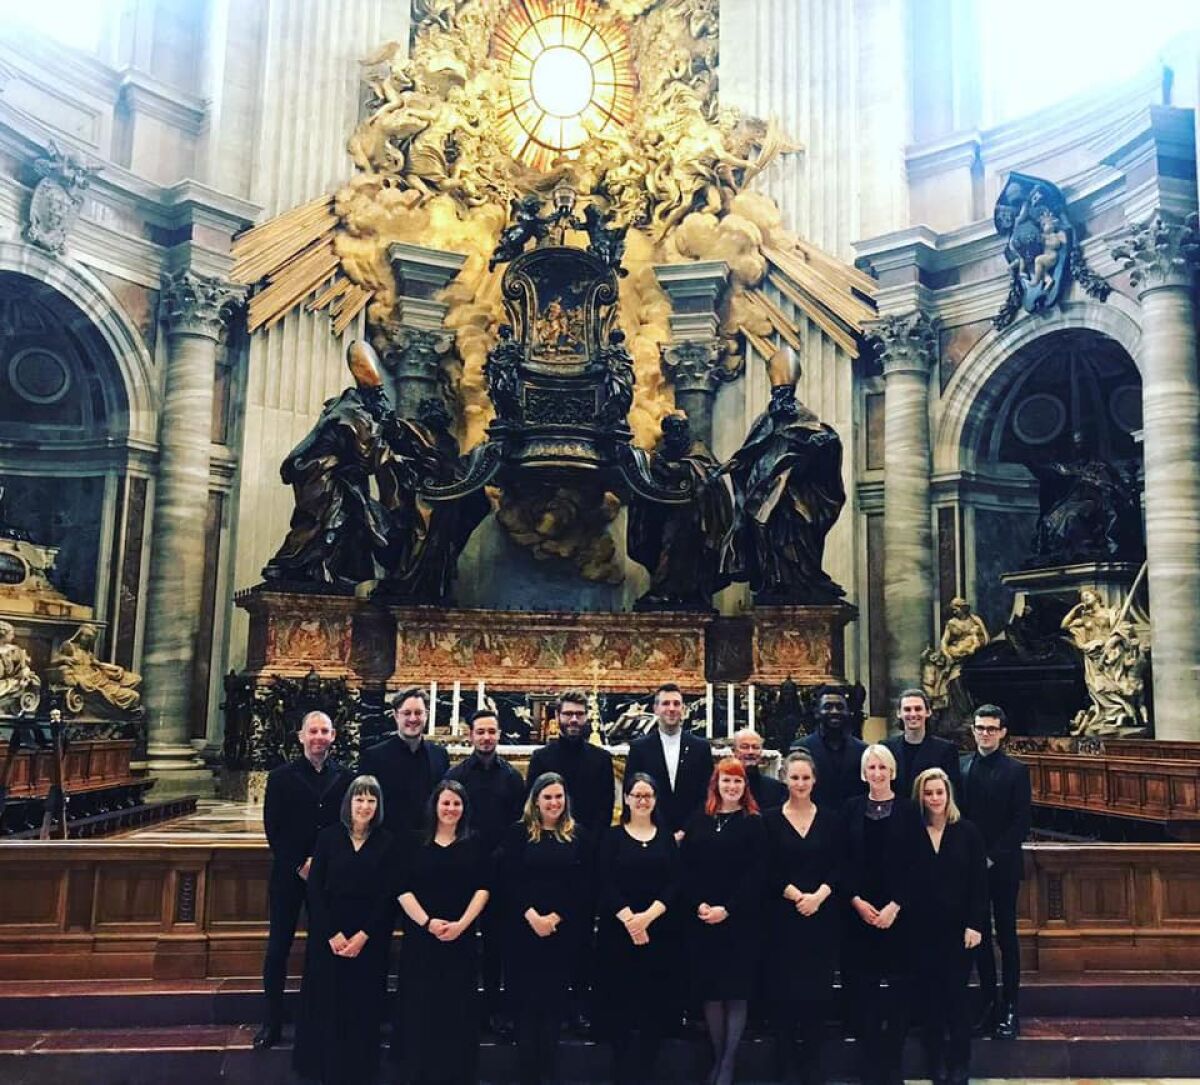 Benjamin Thiele-Long's British choir Lumen performed at St. Peter’s Basilica at the Vatican.